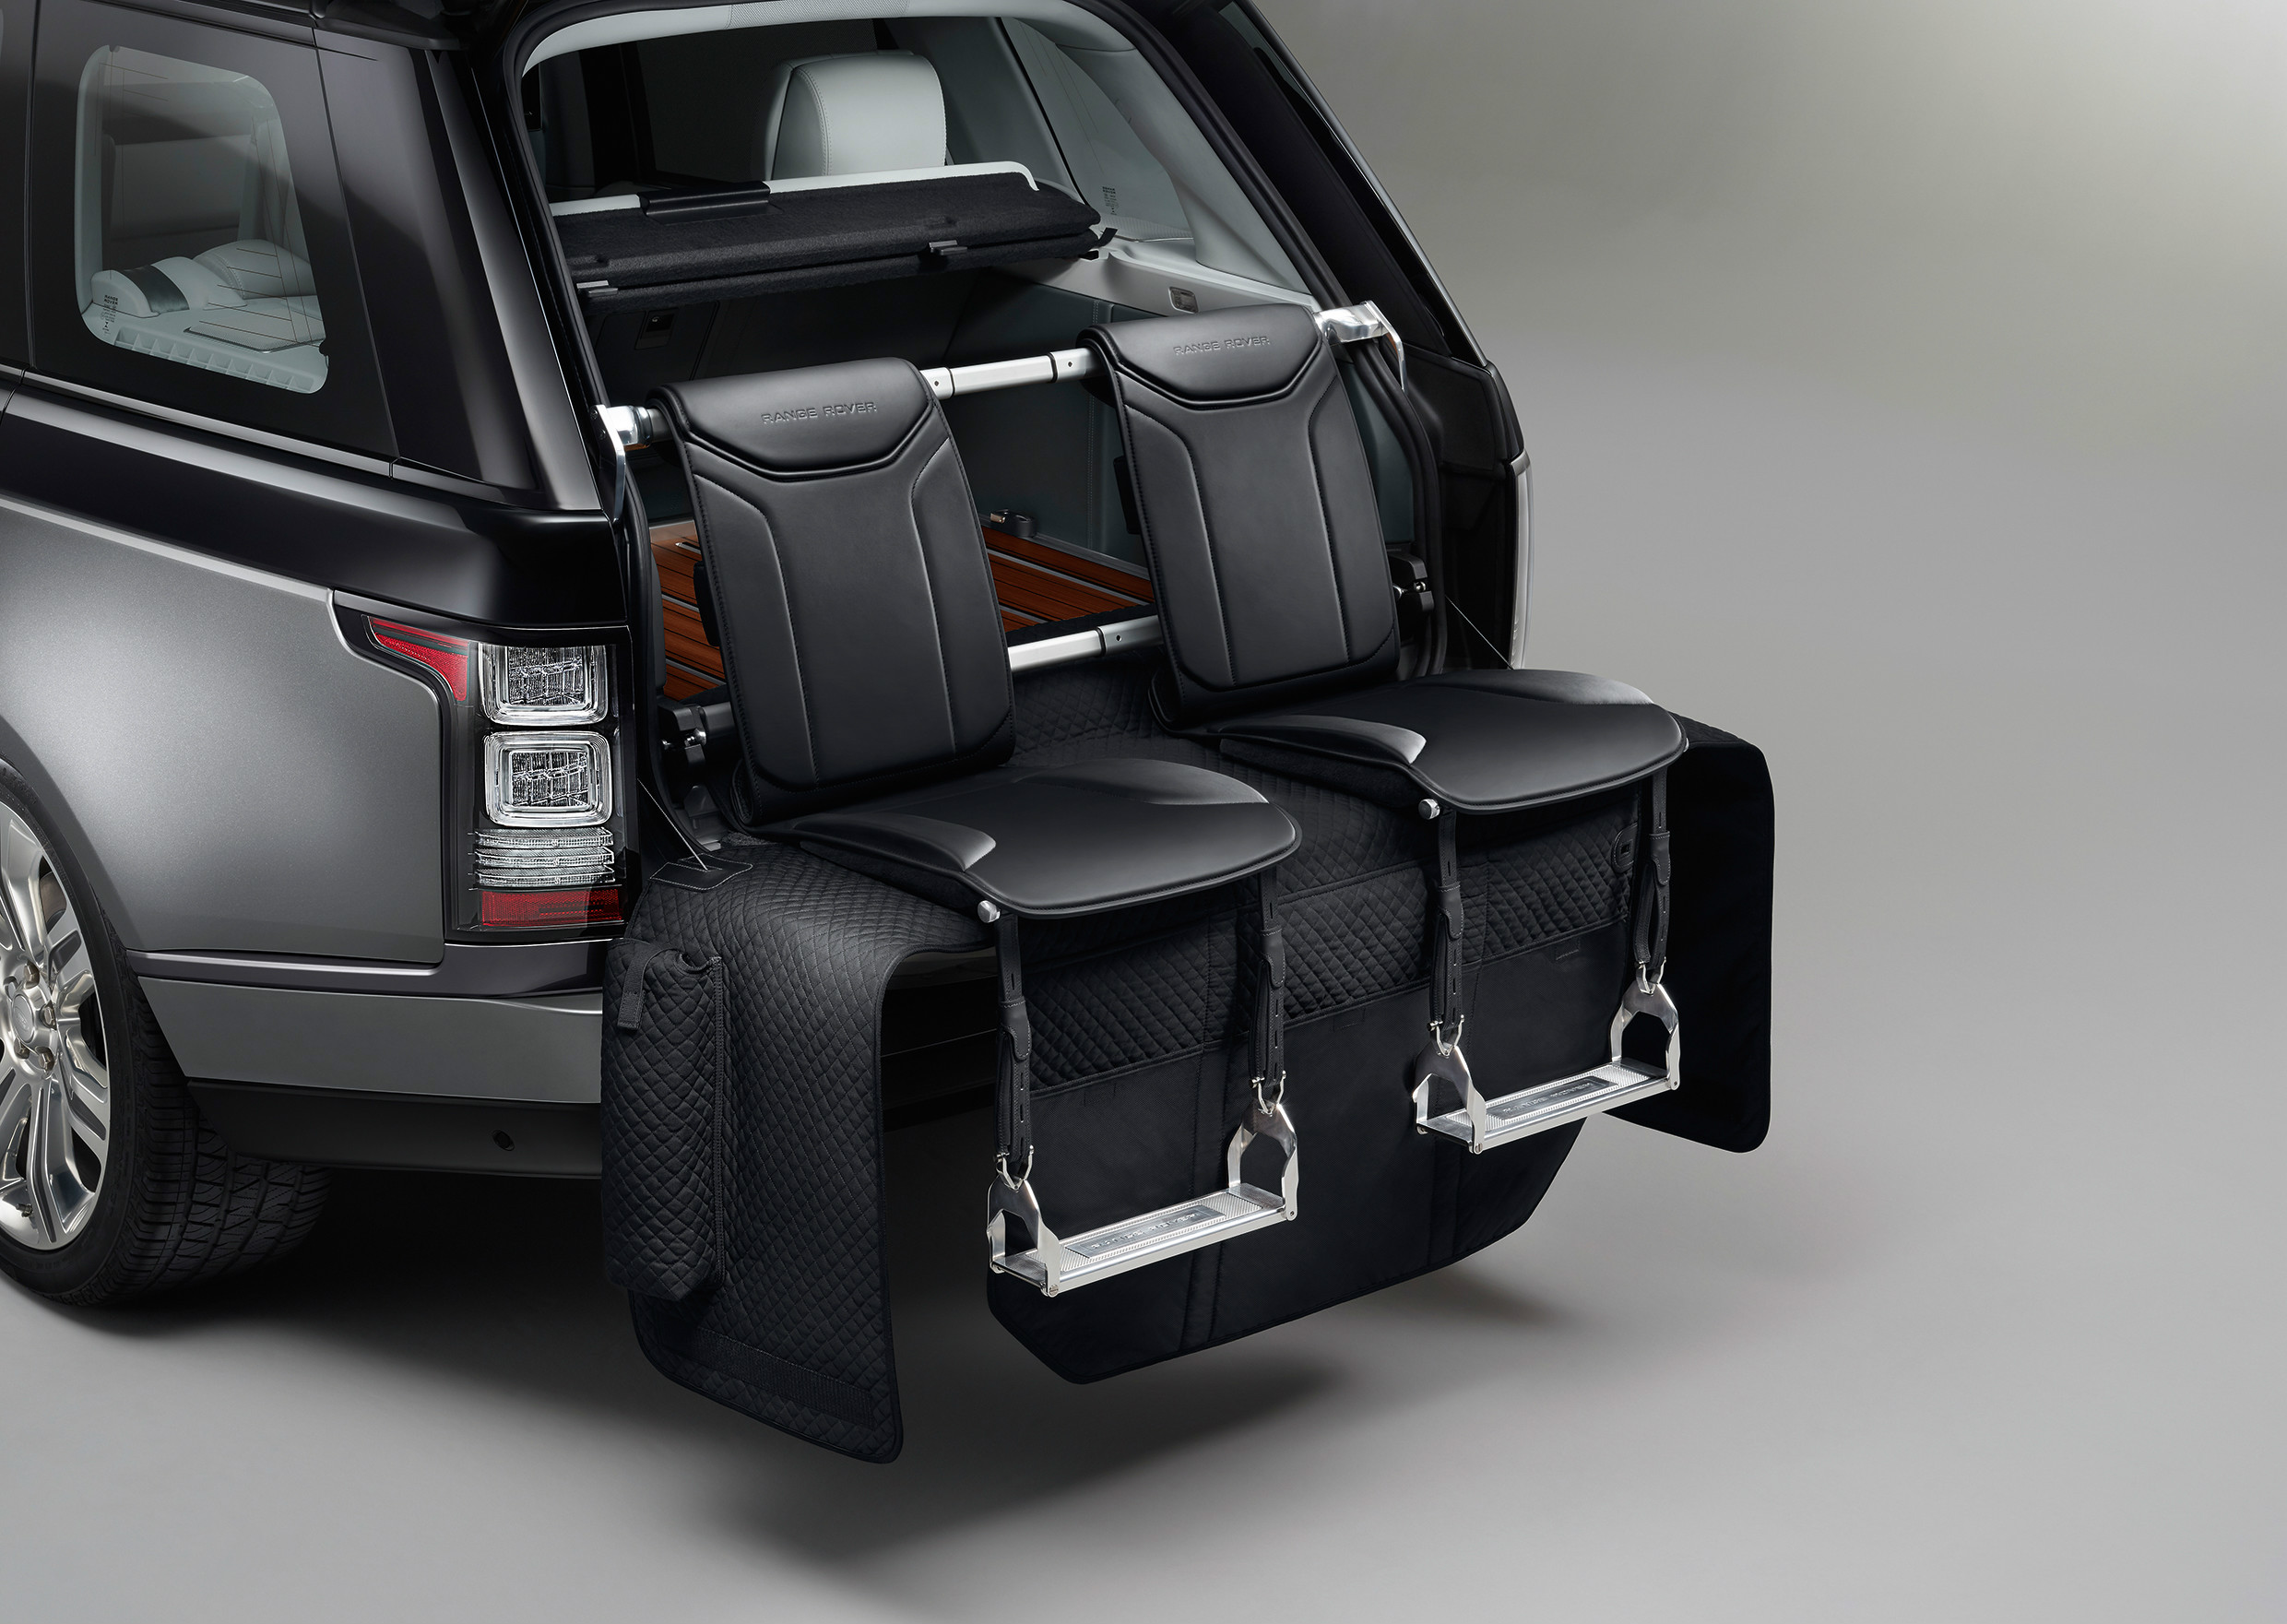 Range Rover SVAutobiography jump seats